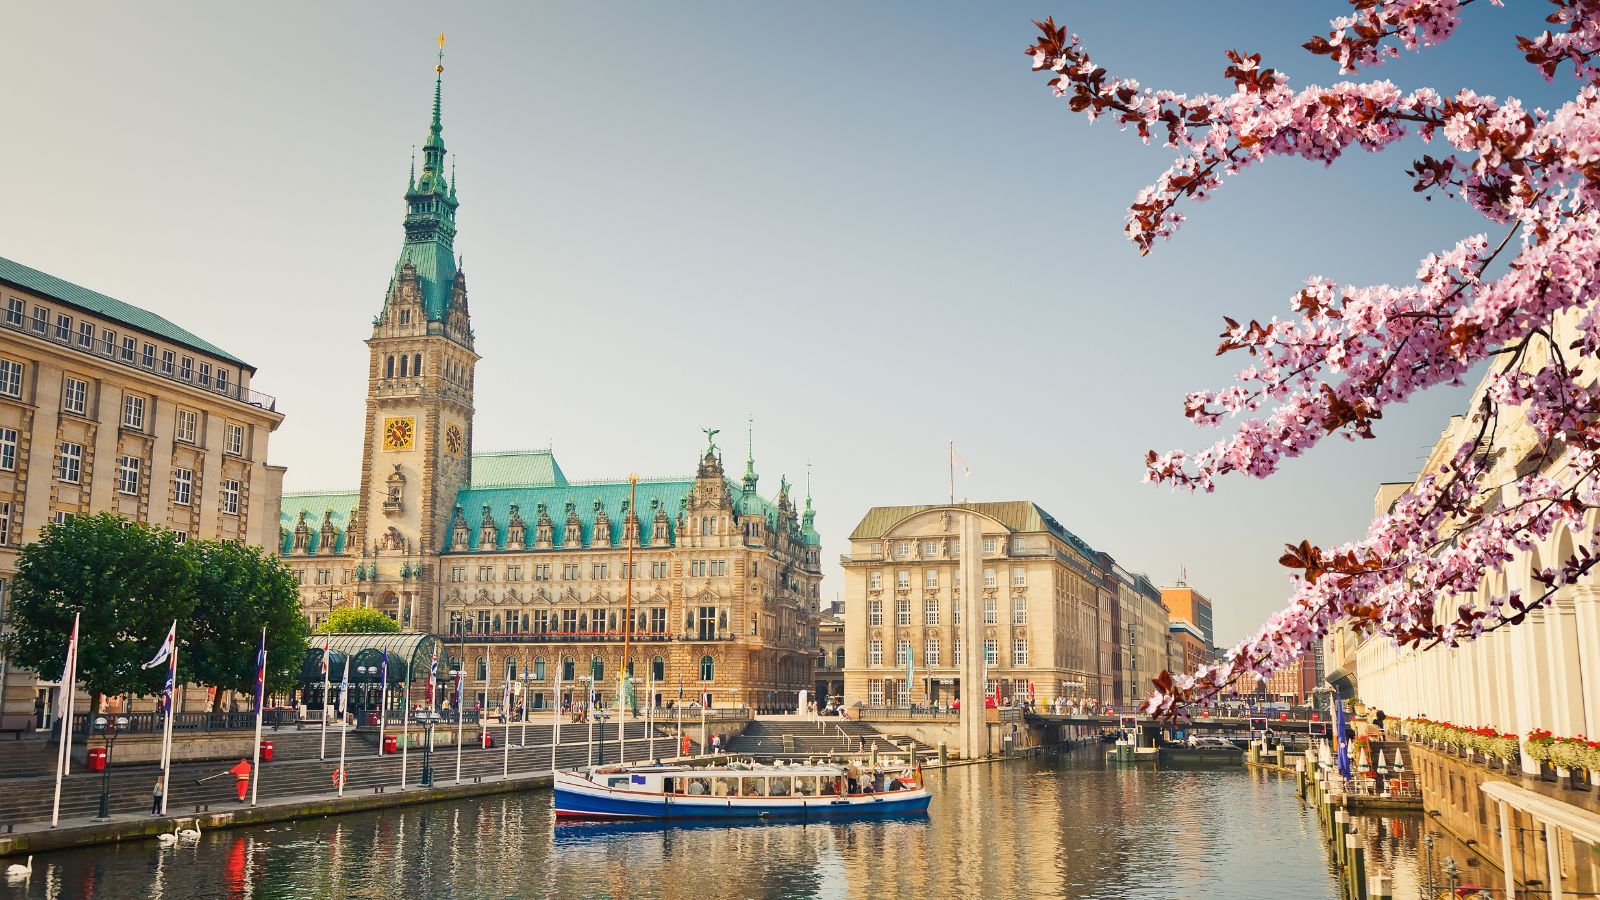 Hamburg townhall and Alster river at spring